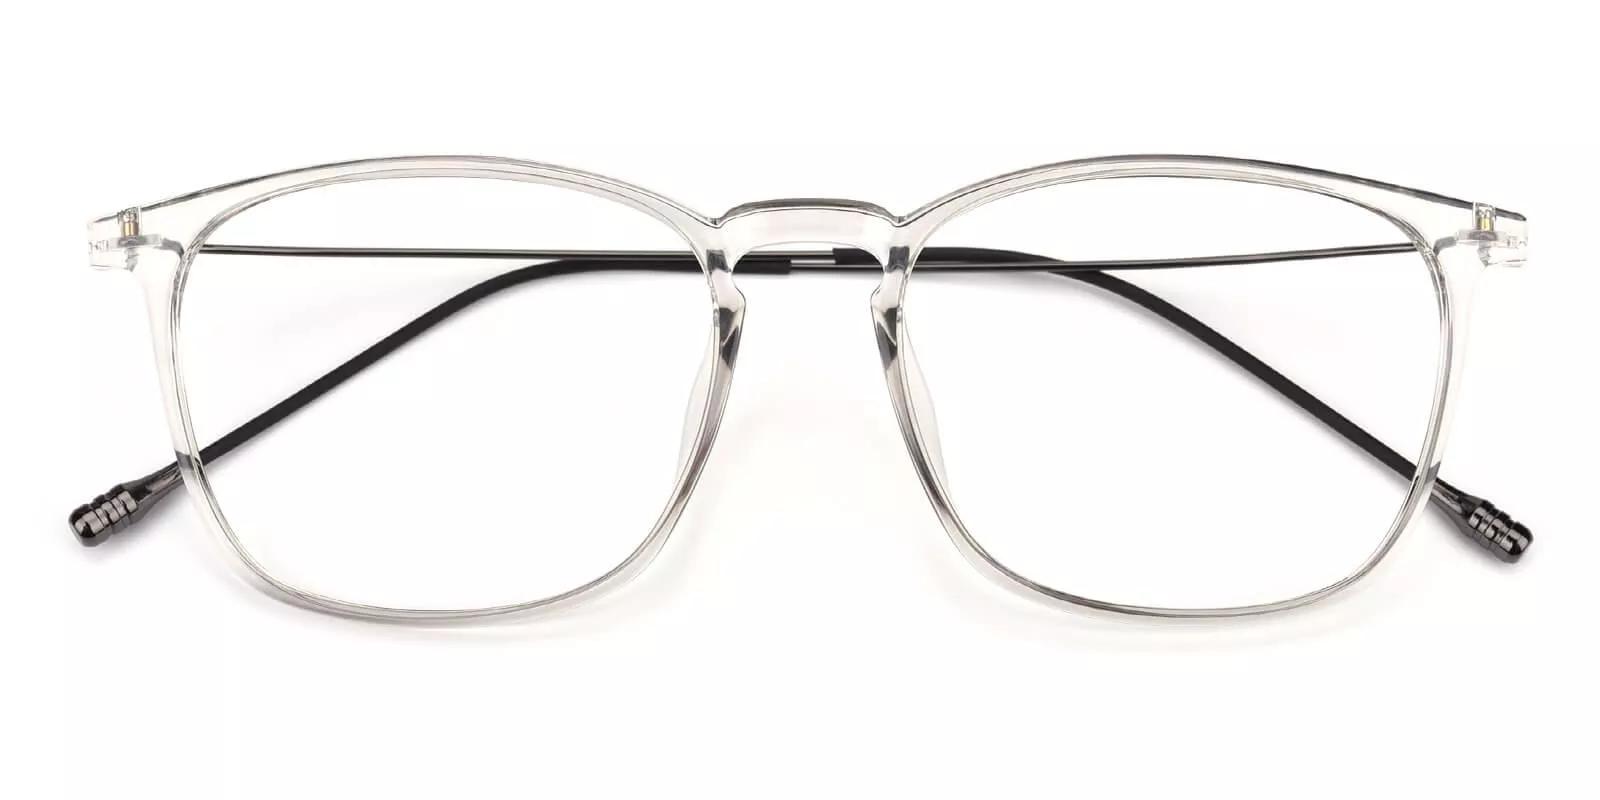 Norwalk Prescription Eyeglasses Gray Clear